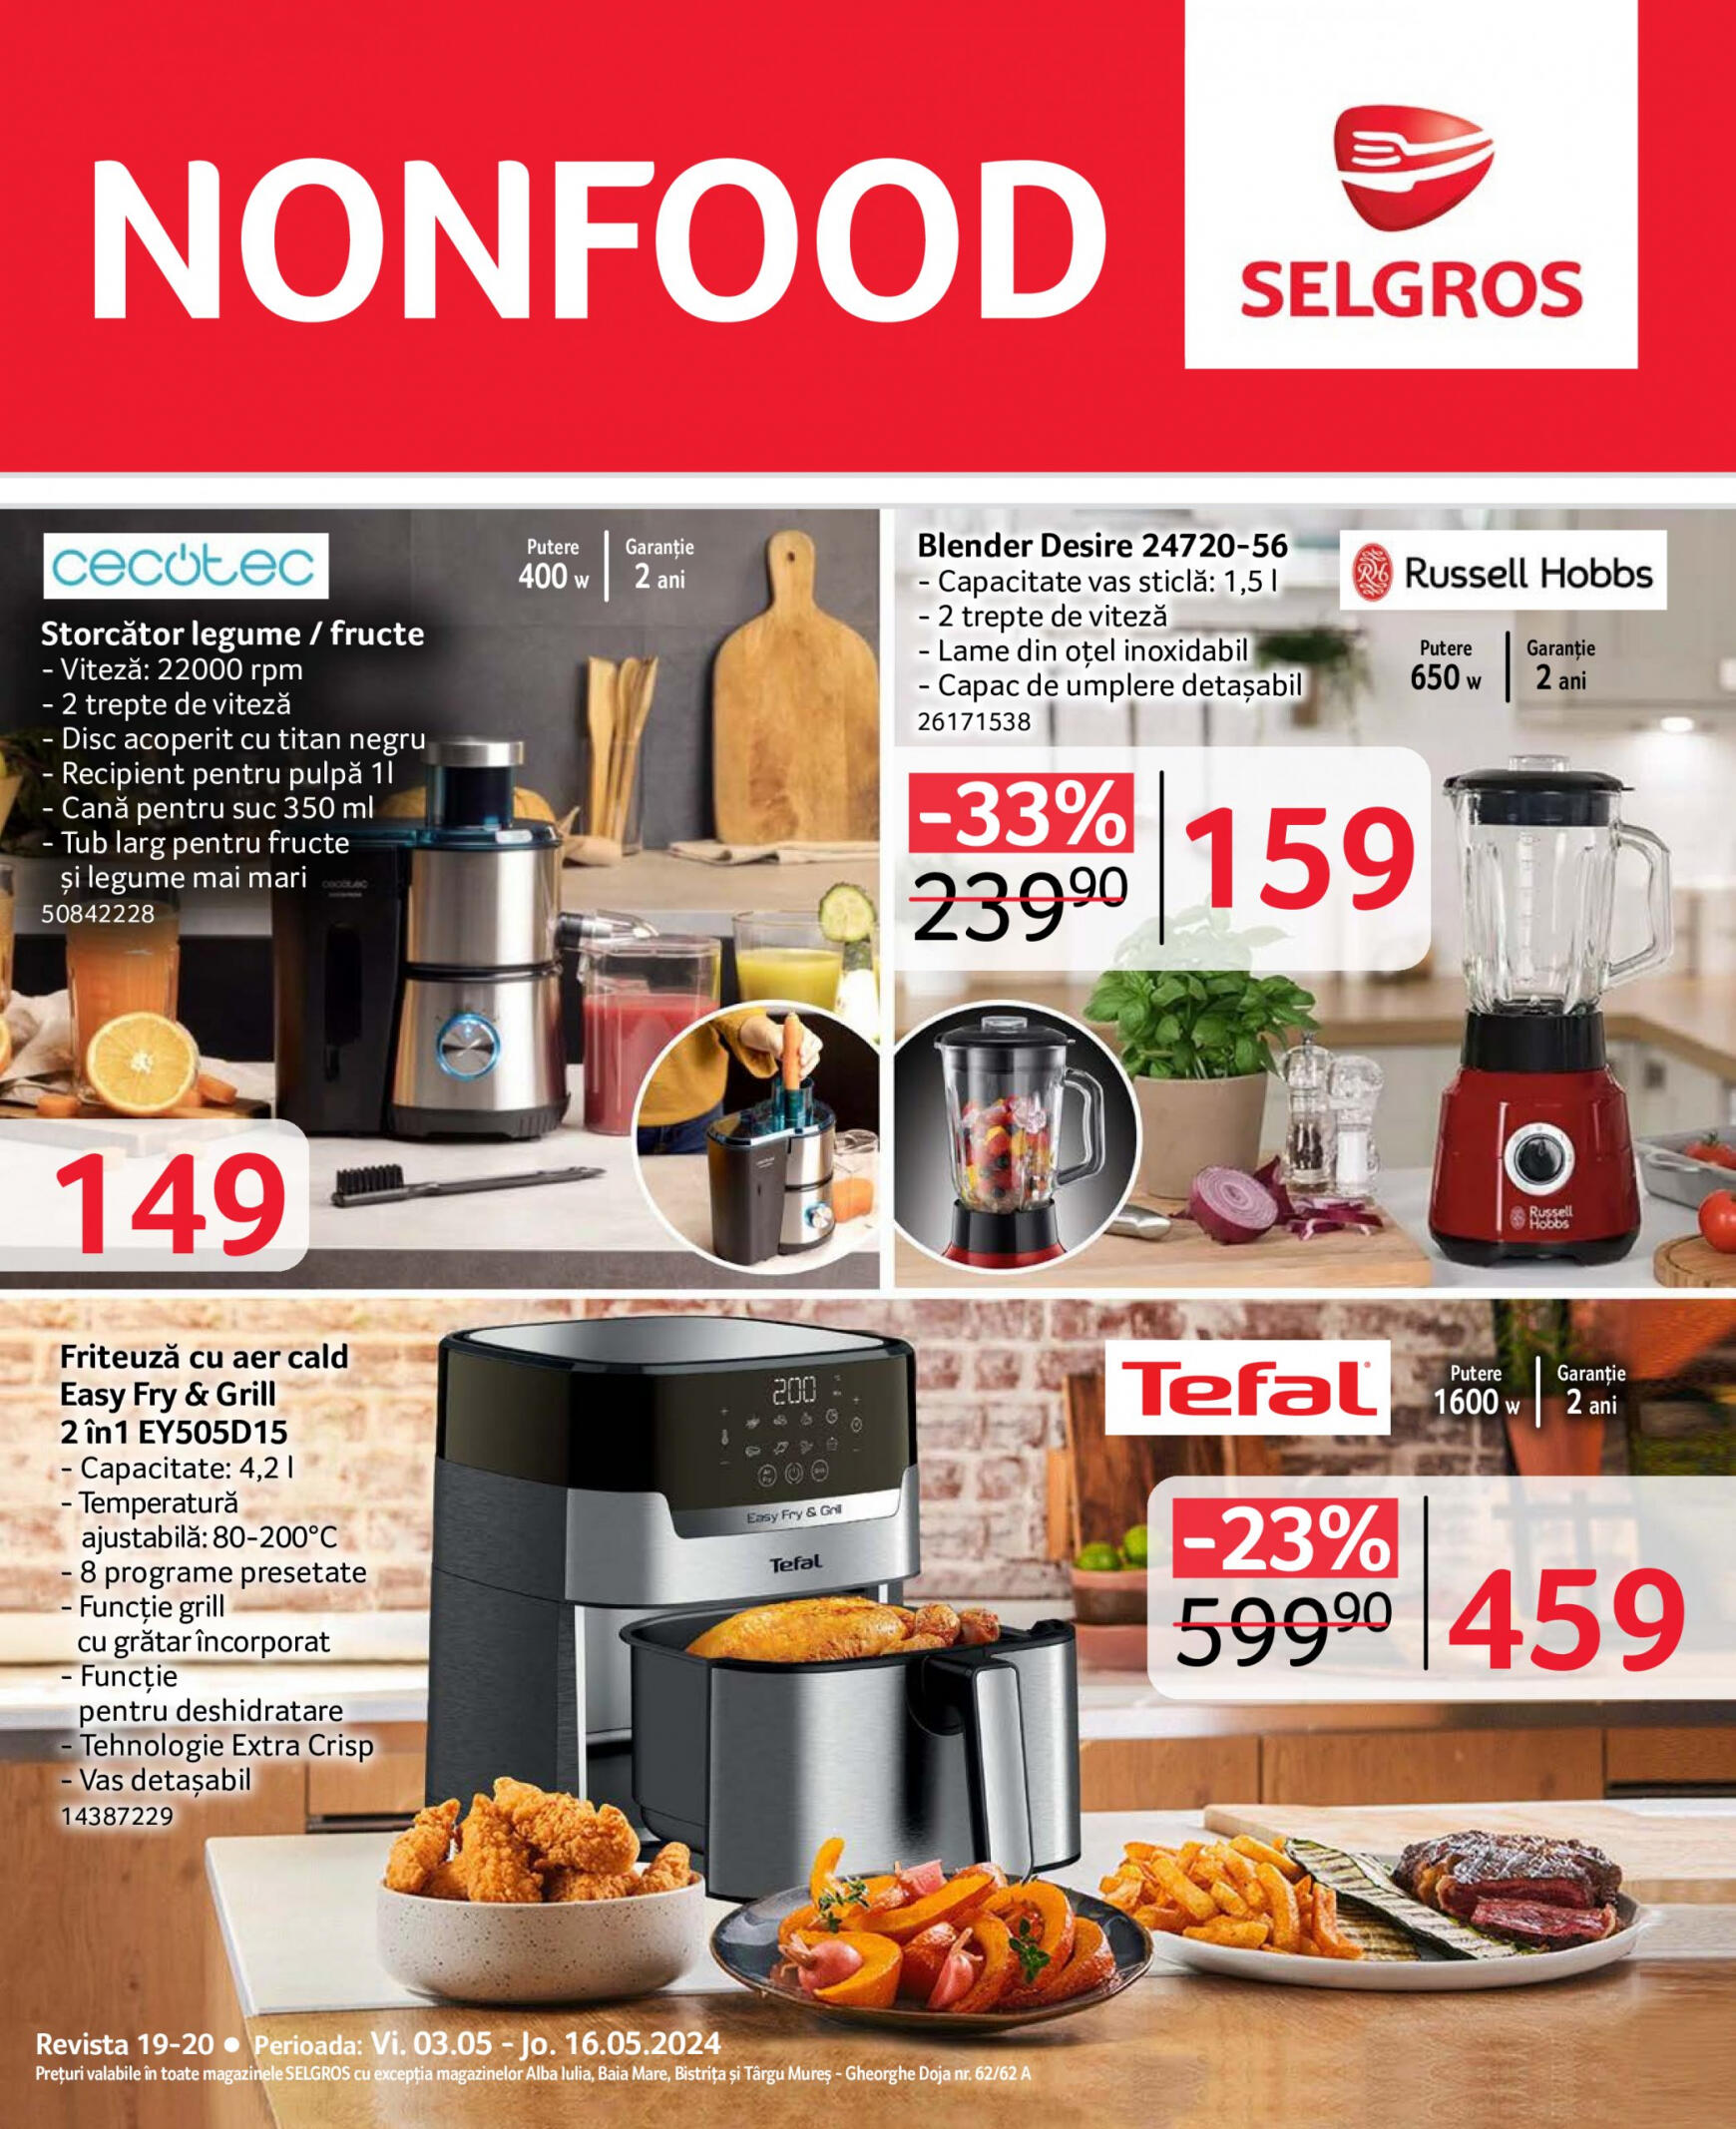 selgros - Catalog nou Selgros - Nonfood 03.05. - 16.05. - page: 1